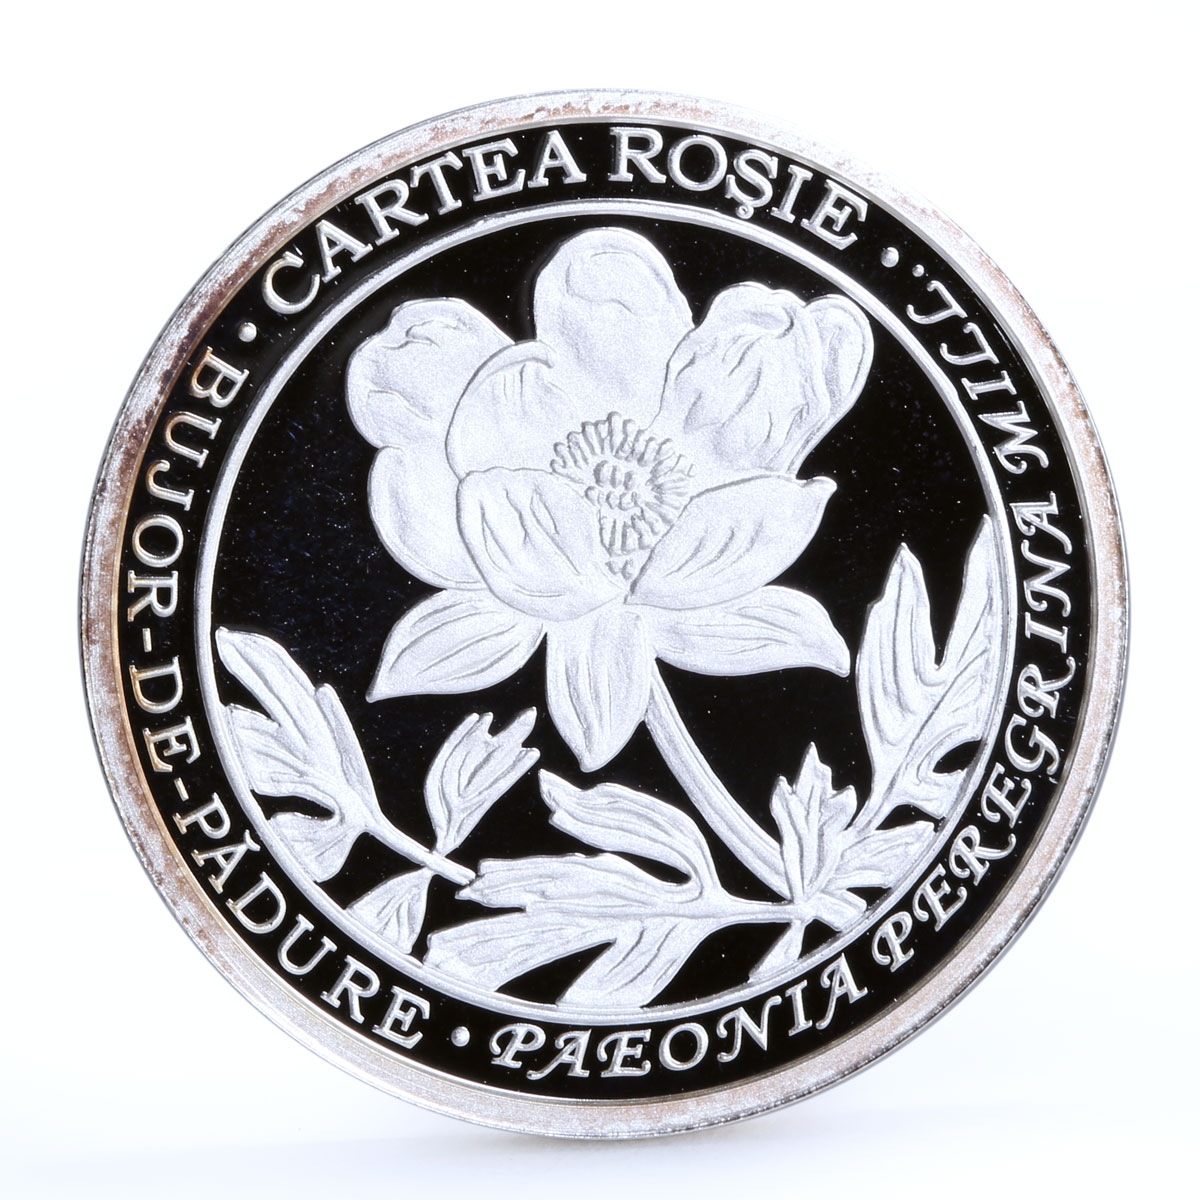 Moldova 50 lei Paeonia Peregrina Flower Flora proof silver coin 2014